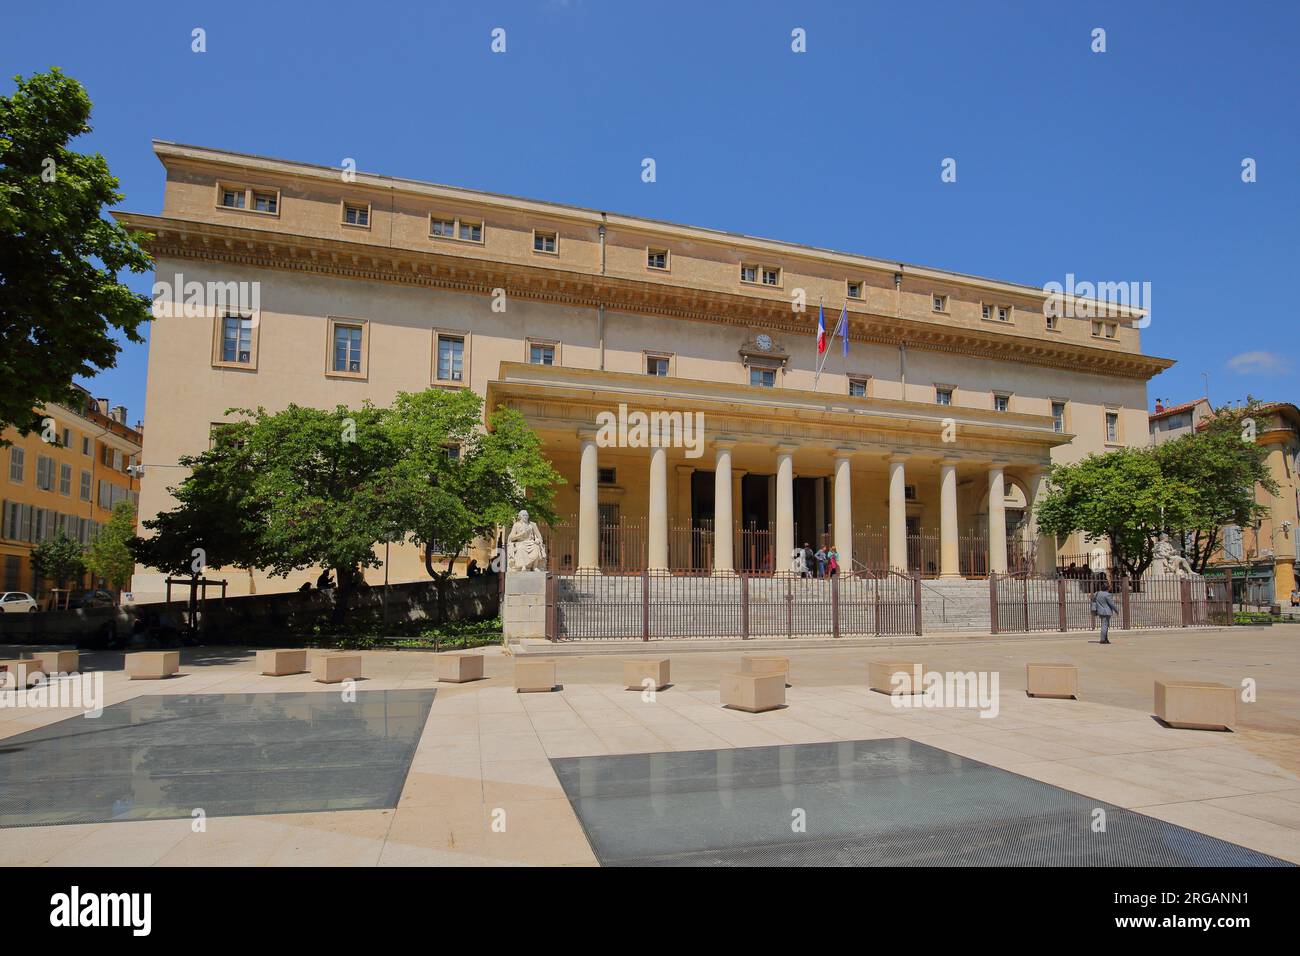 Palais de justice of aix en provence hi-res stock photography and